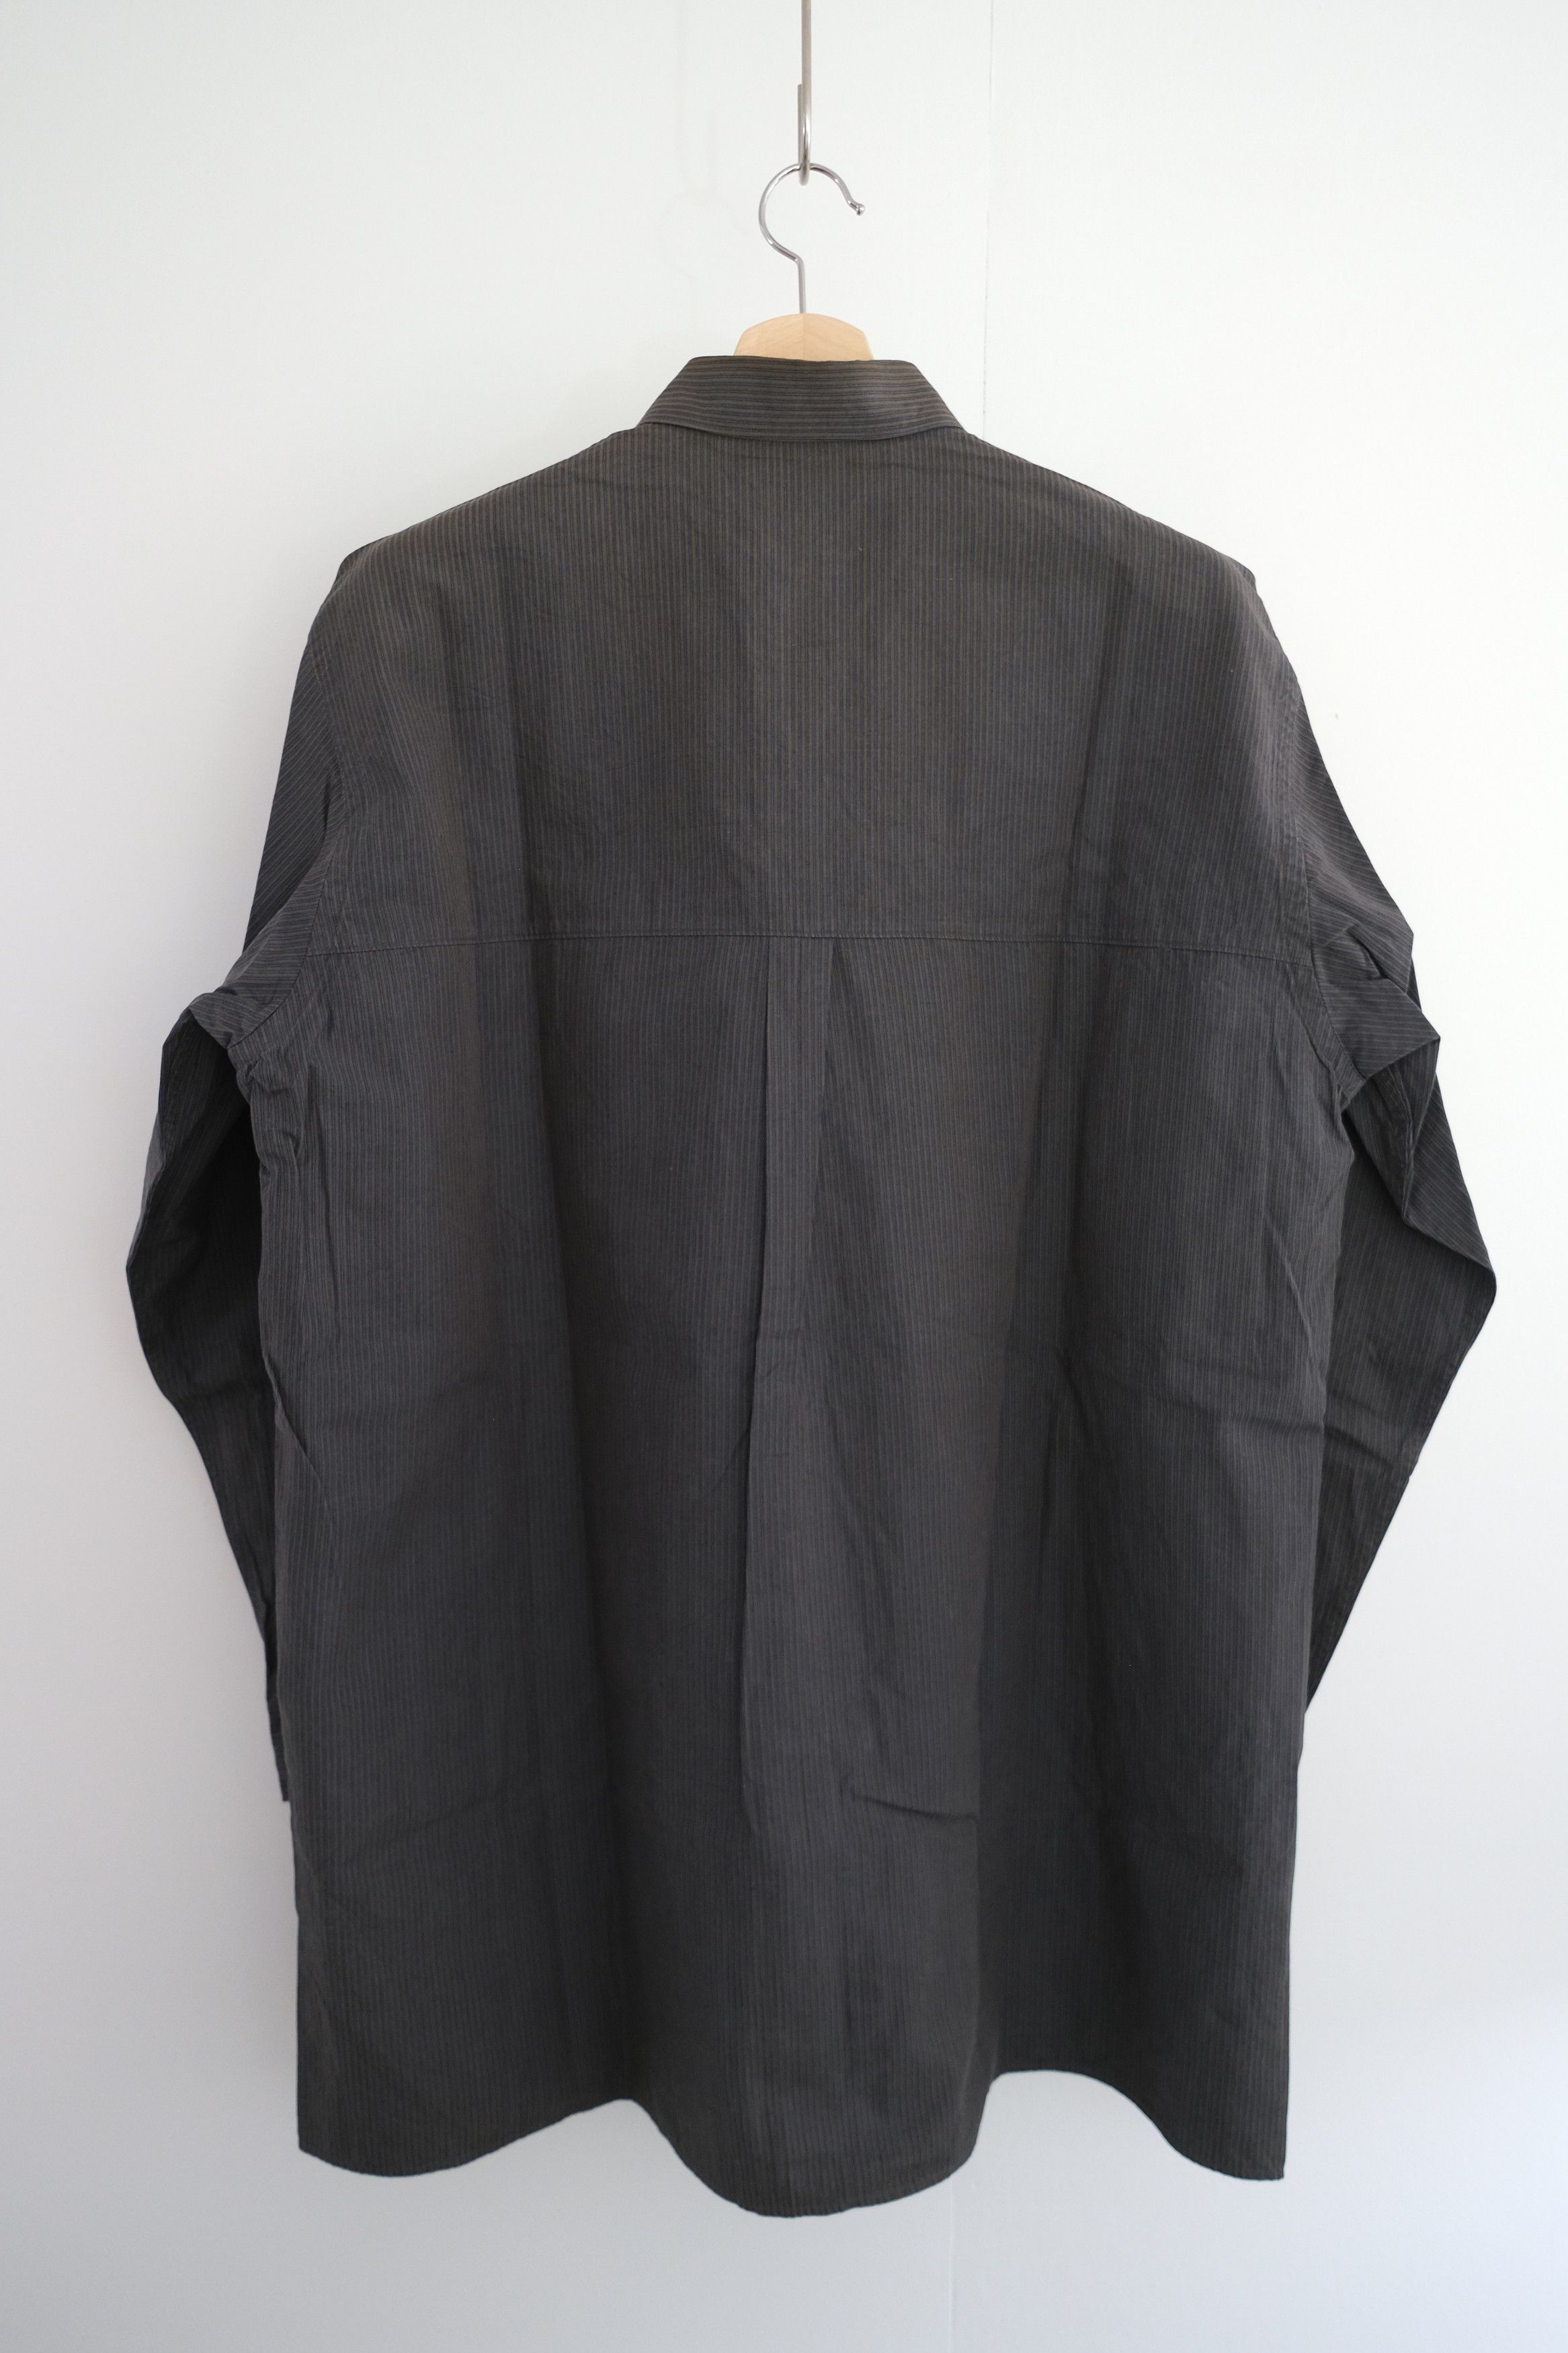 🎐 YFM Archive [1970s-80s] Pocket-Panel Docking Shirt - 16